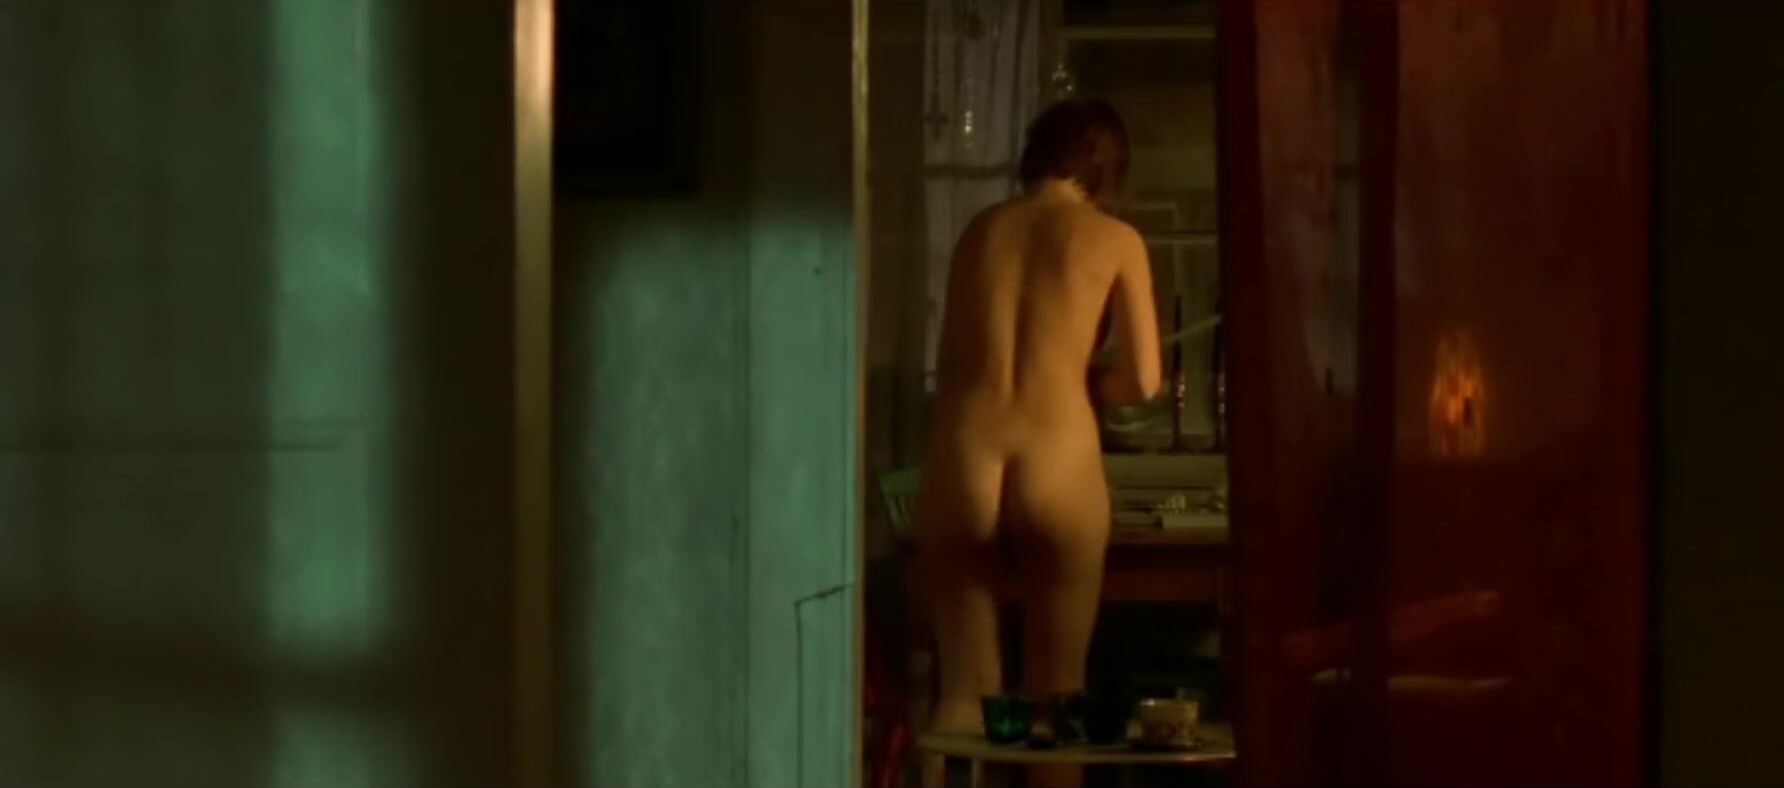 Fucks Swedish film Hannah Med H sex scene where man thrusts cock into Tove Edfeldt nude (2003) Made - 1